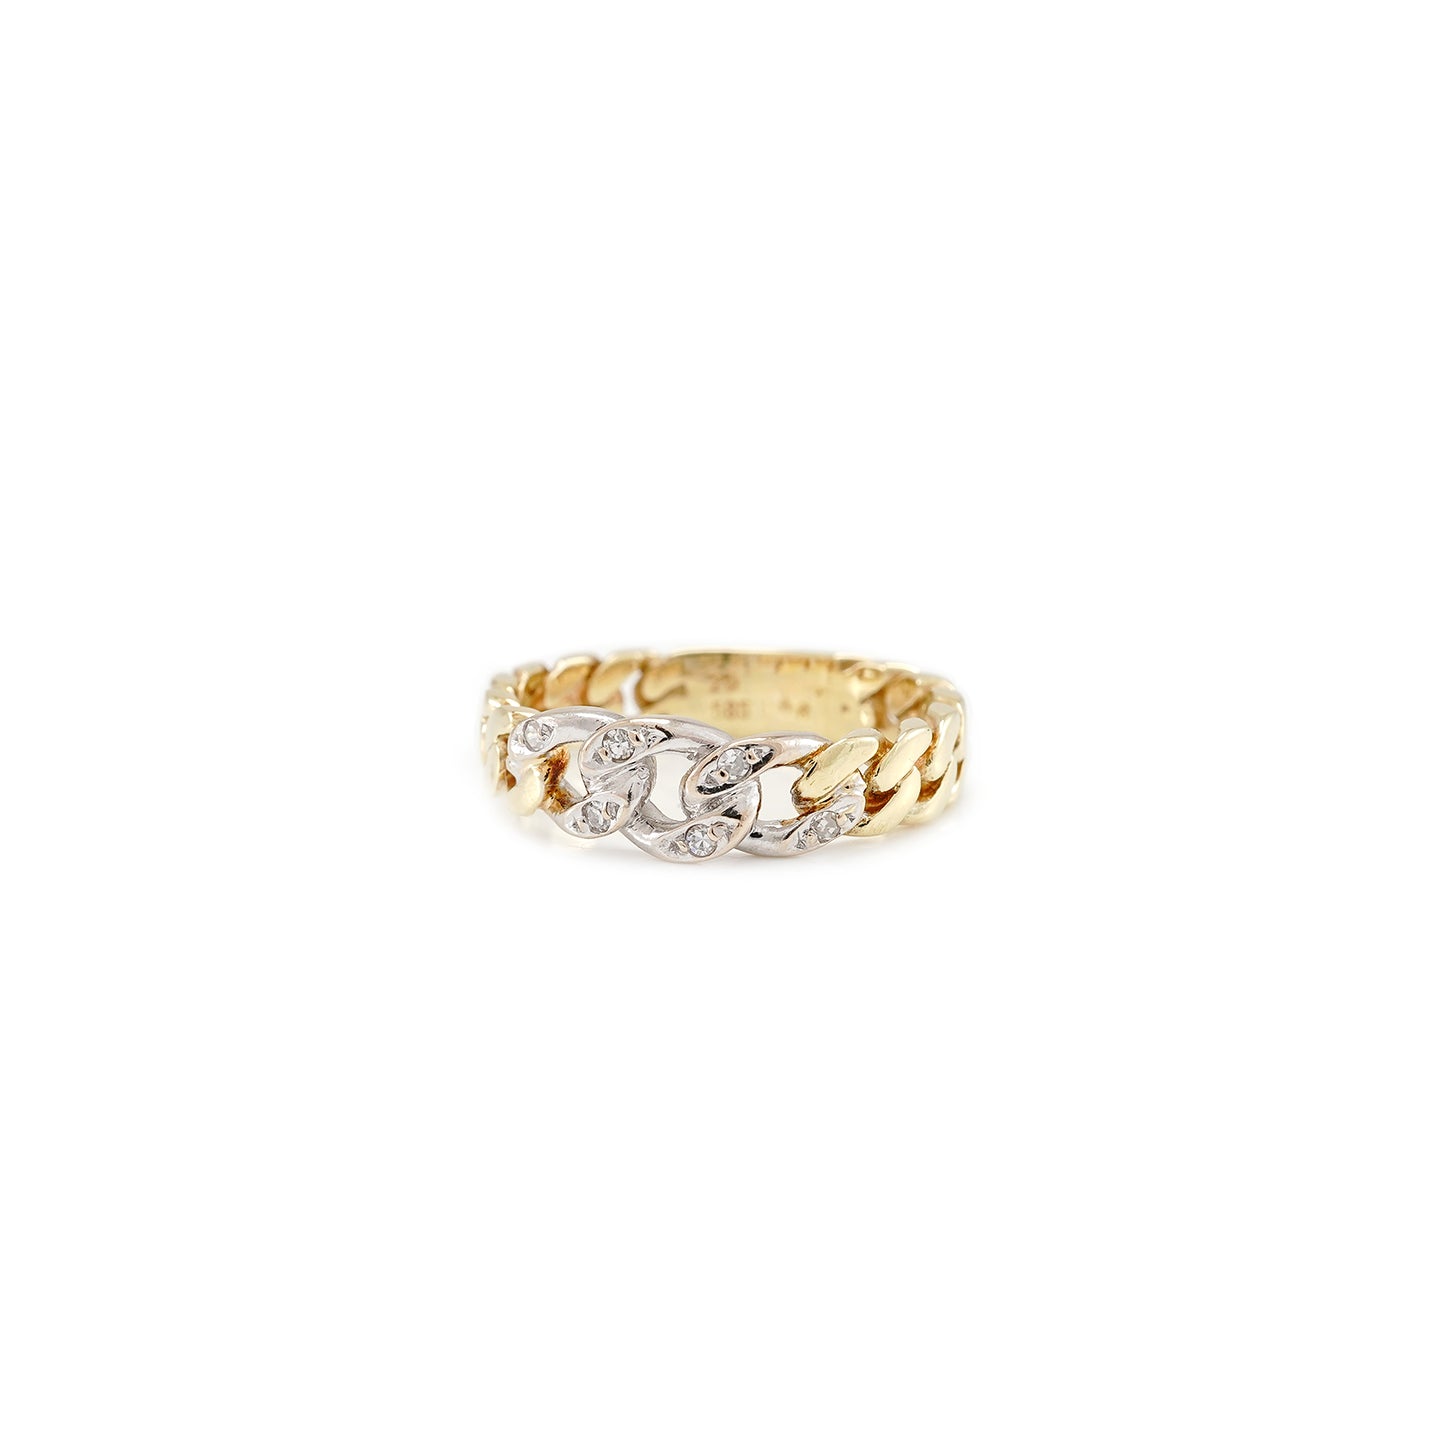 Diamond ring tank style chain ring yellow gold white gold 14K women's jewelry gold ring